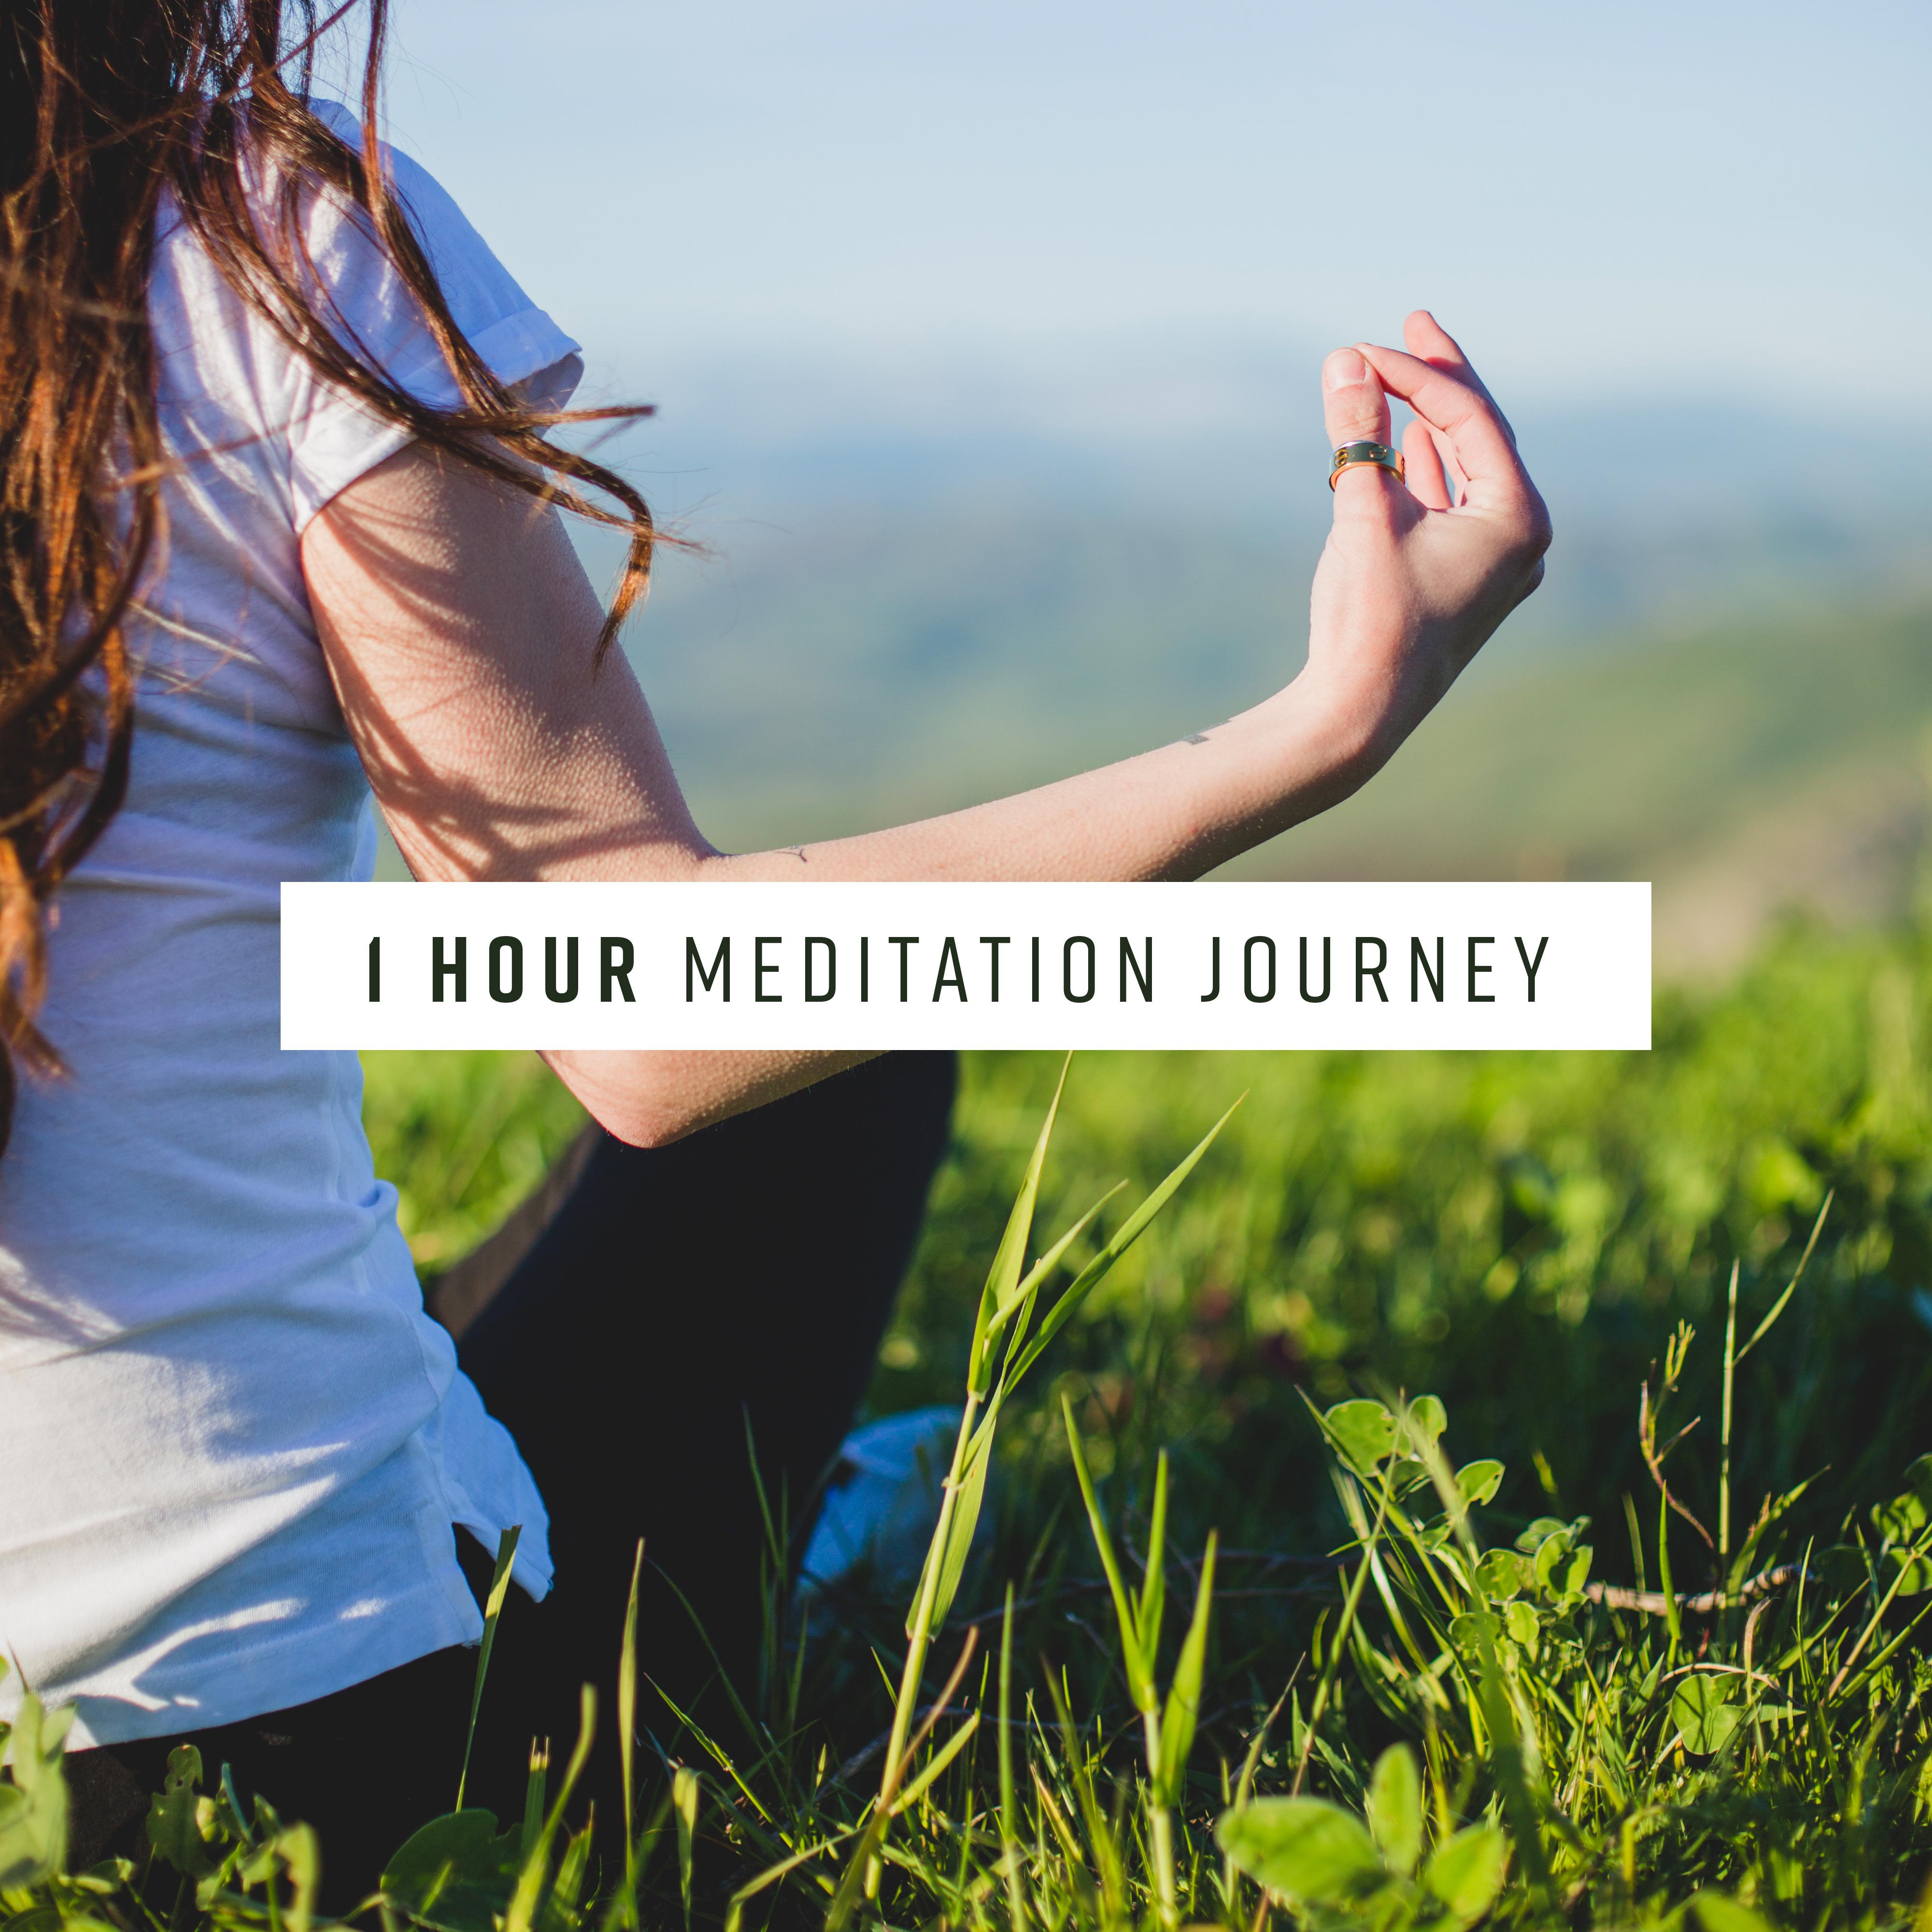 1 Hour Meditation Journey